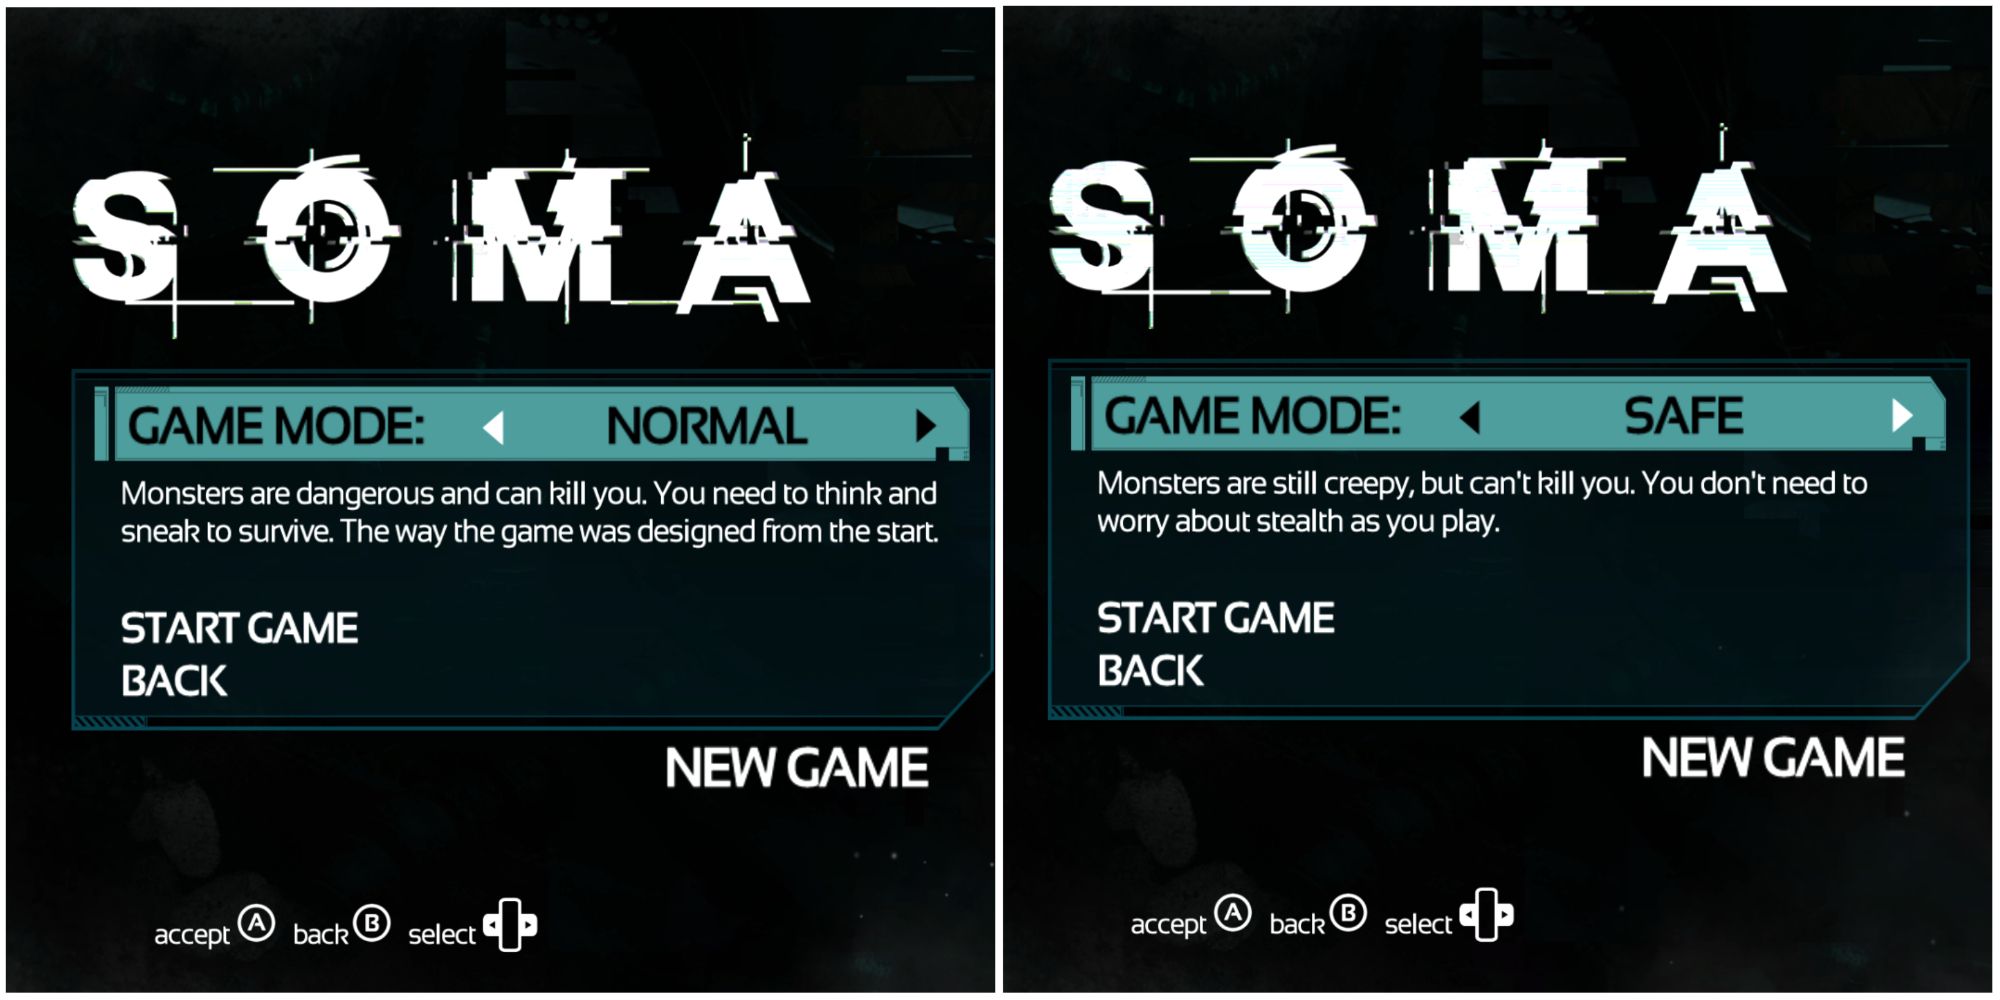 soma normal mode and safe mode descriptions at start of game